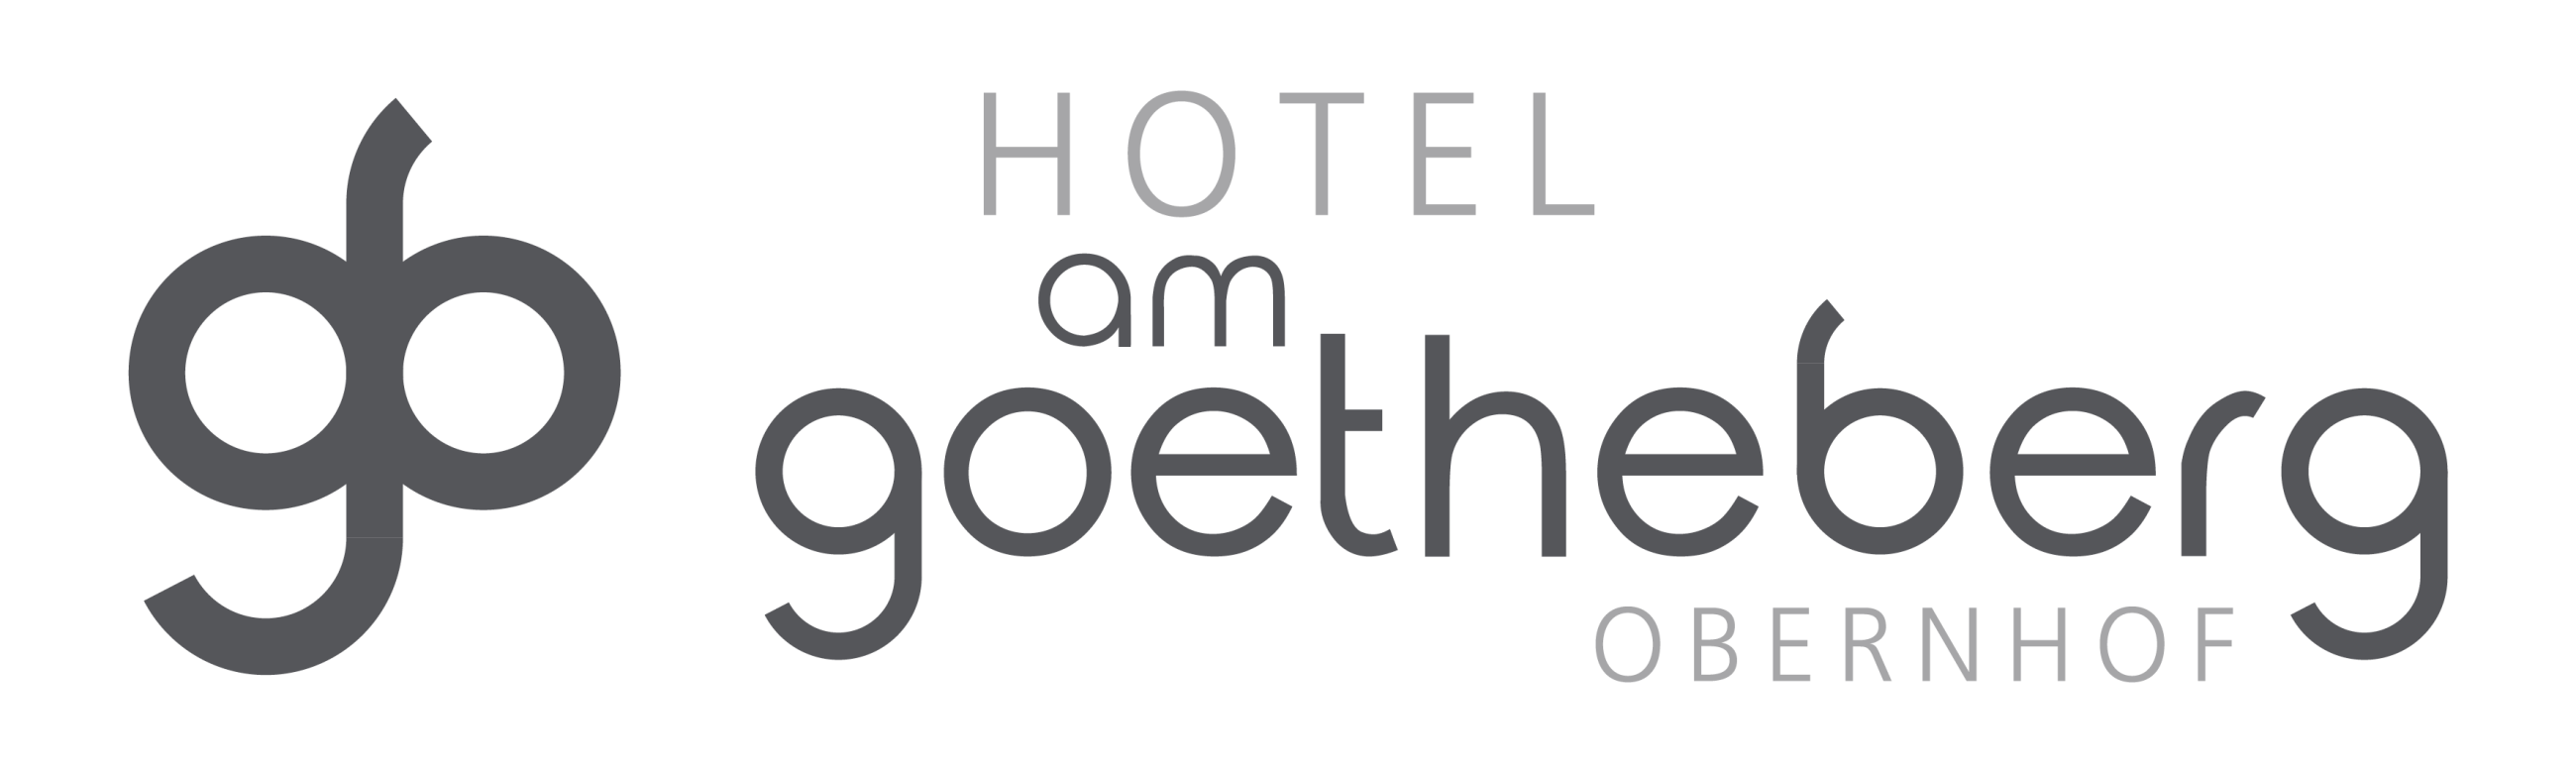 (c) Hotel-am-goetheberg.de